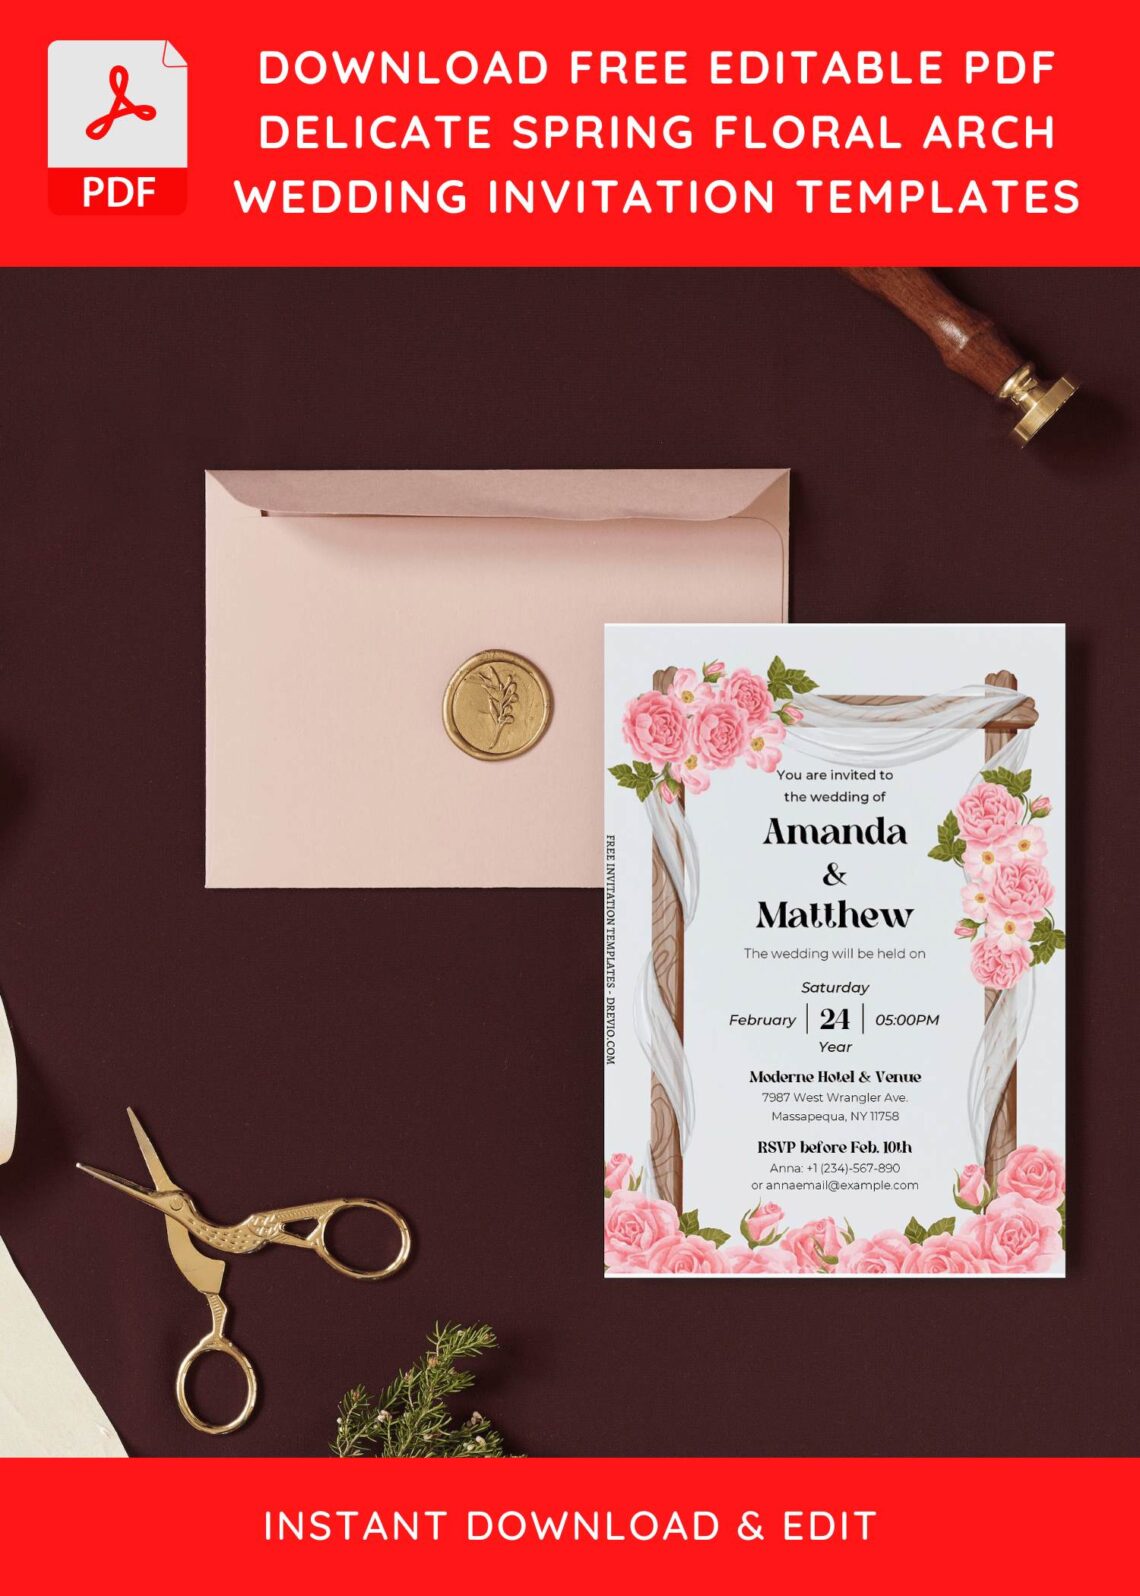 (Free Editable PDF) Botanical Arch Spring Floral Wedding Invitation Templates I